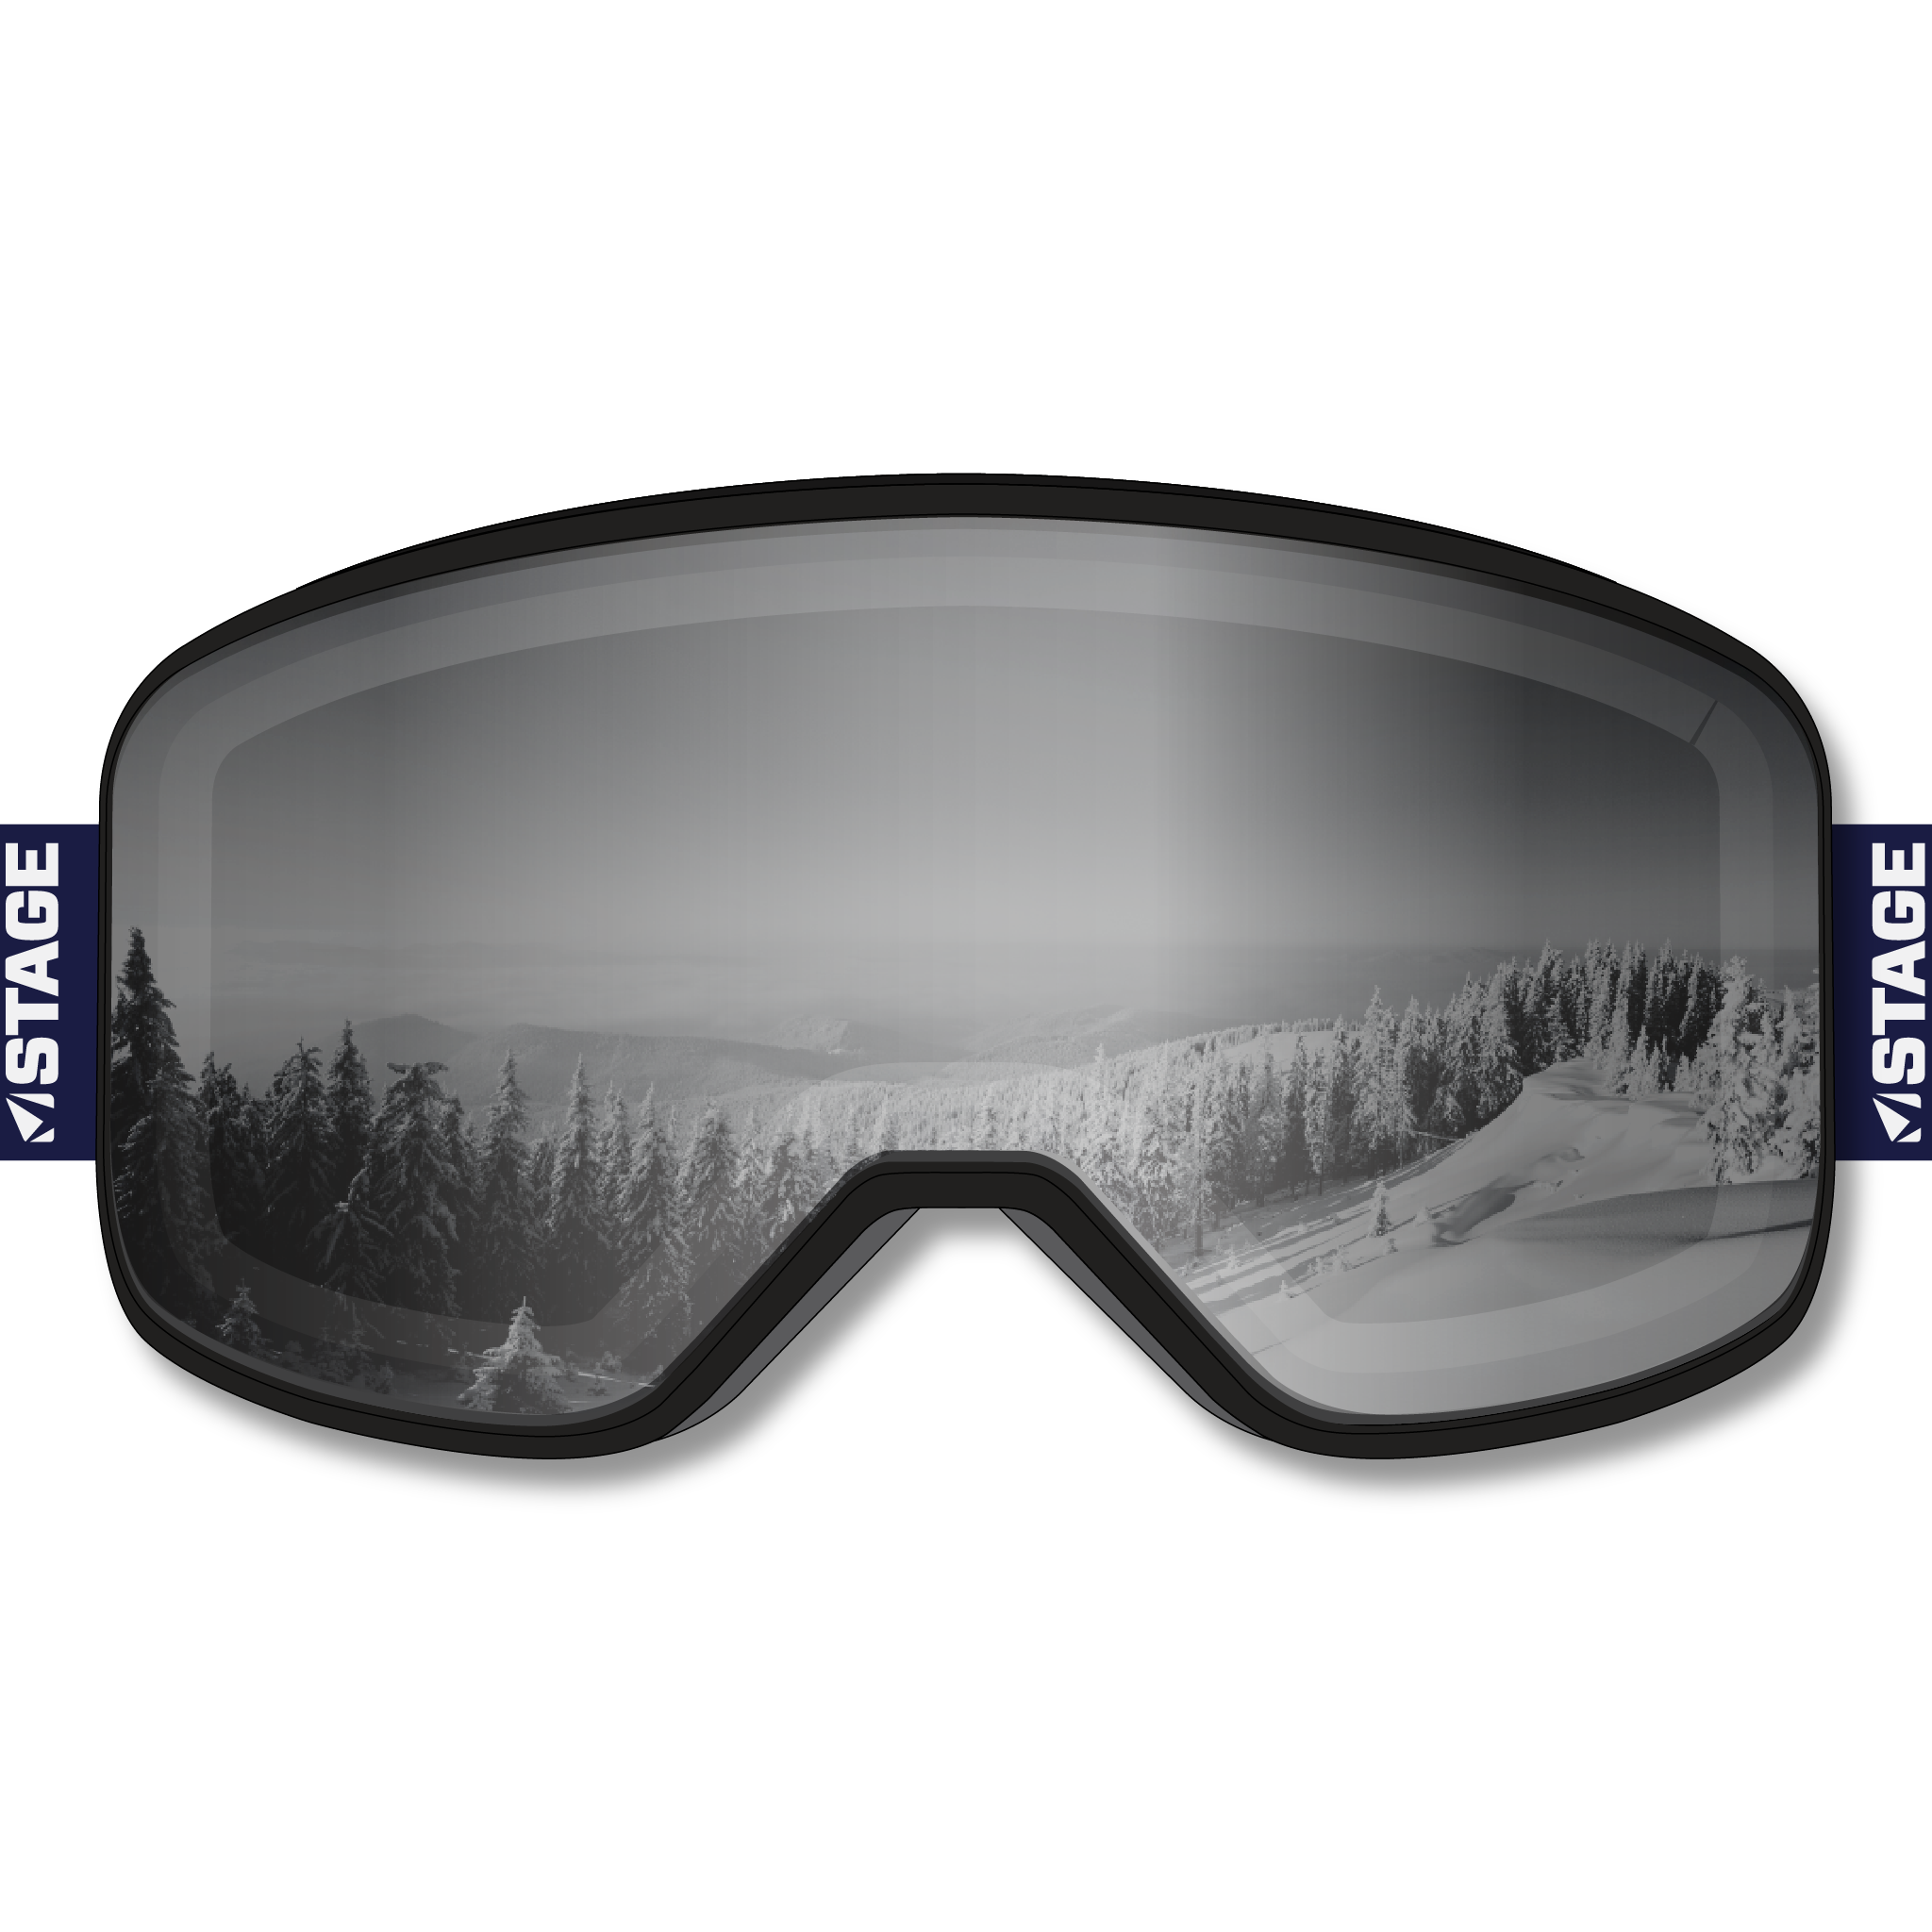 New England Disabled Sports Prop Ski Goggle - Black Frame w/ Mirror Chrome Lens - Adult Universal